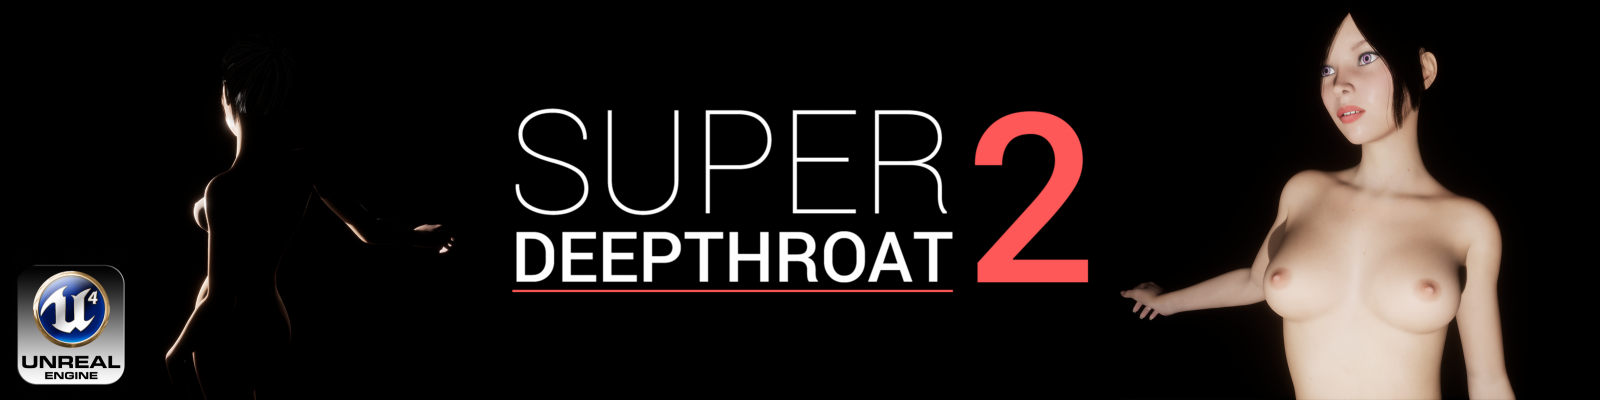 Download deep throat Free Super